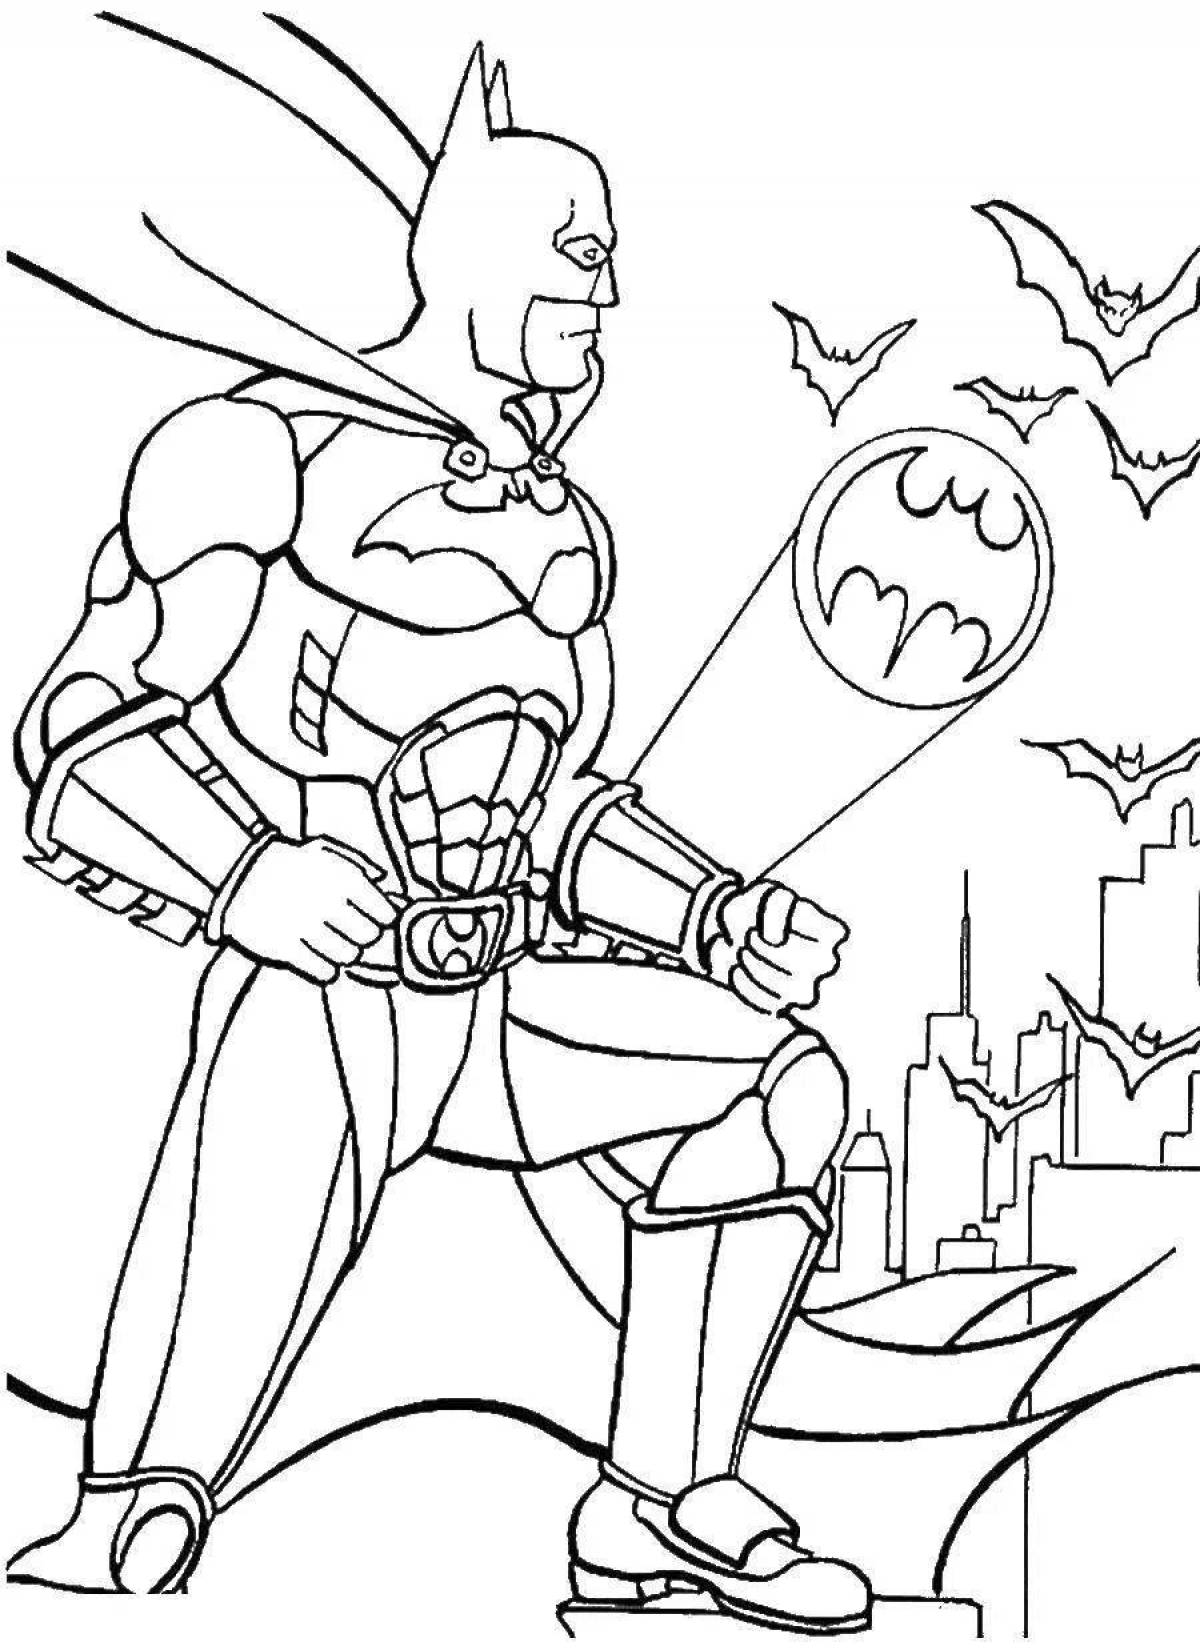 Batman shining coloring book